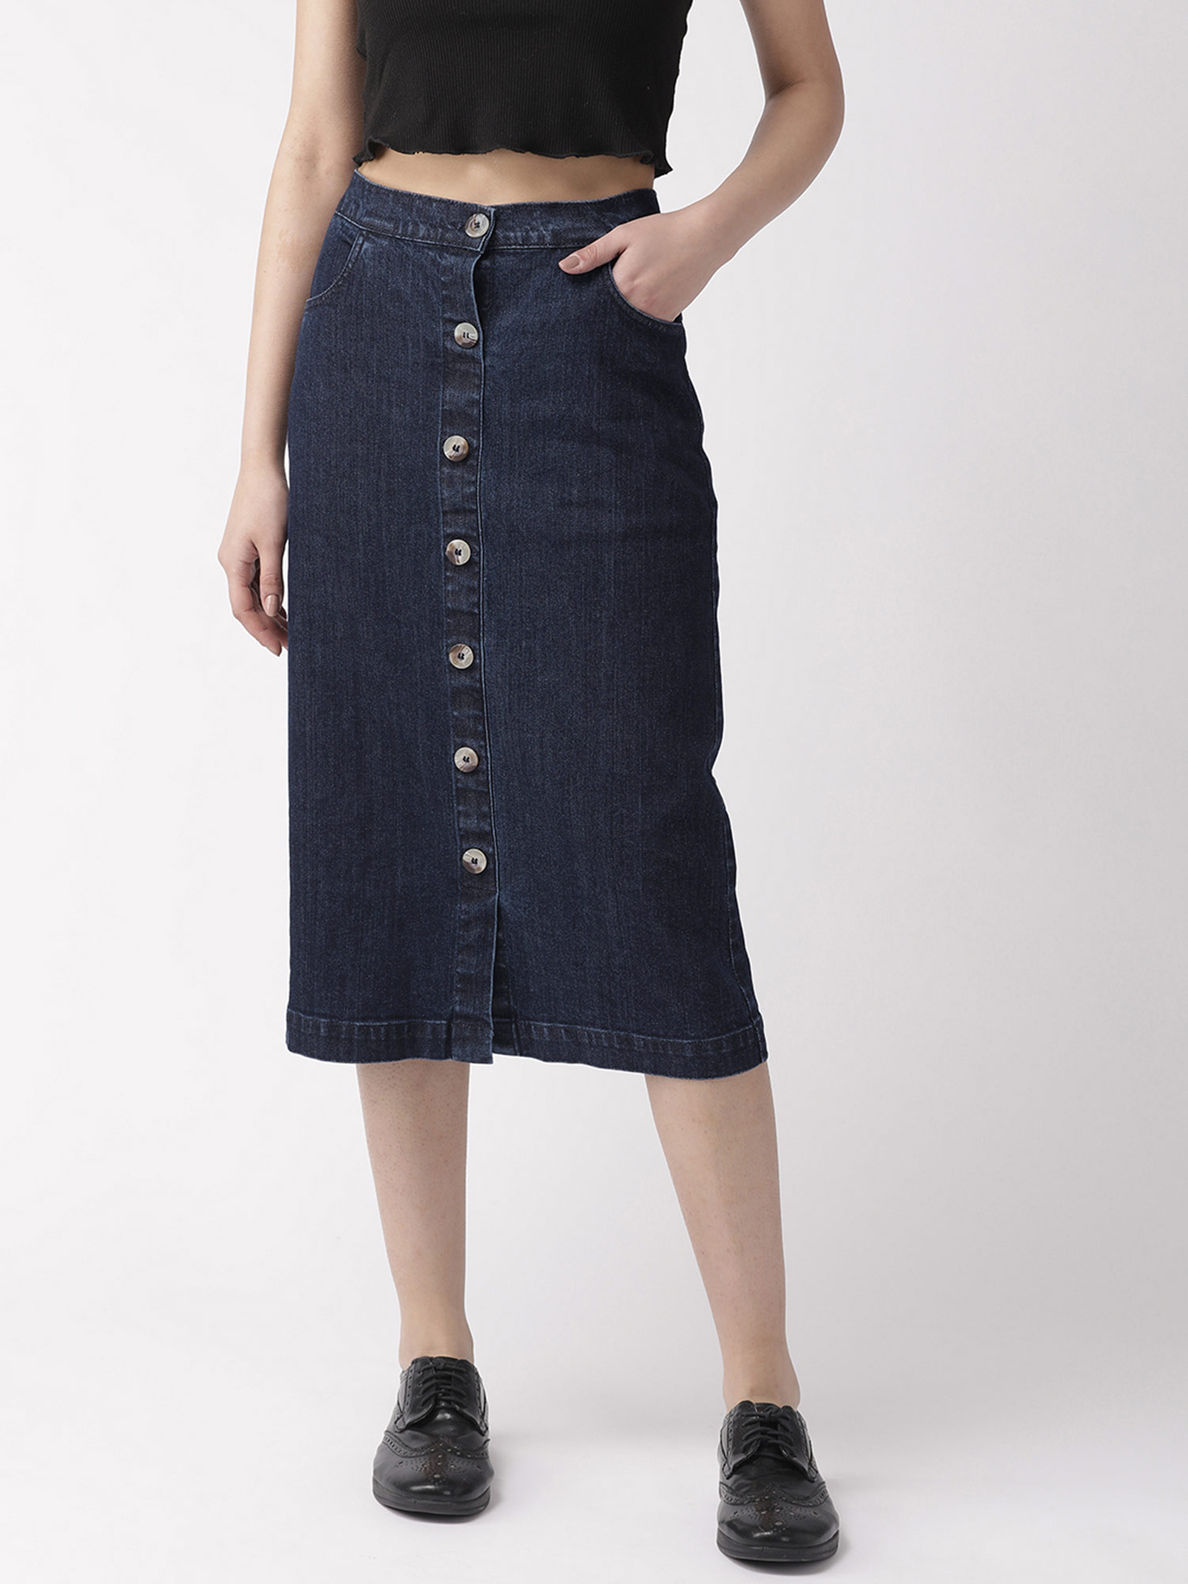 River Island knee length denim skirt in mid wash | ASOS